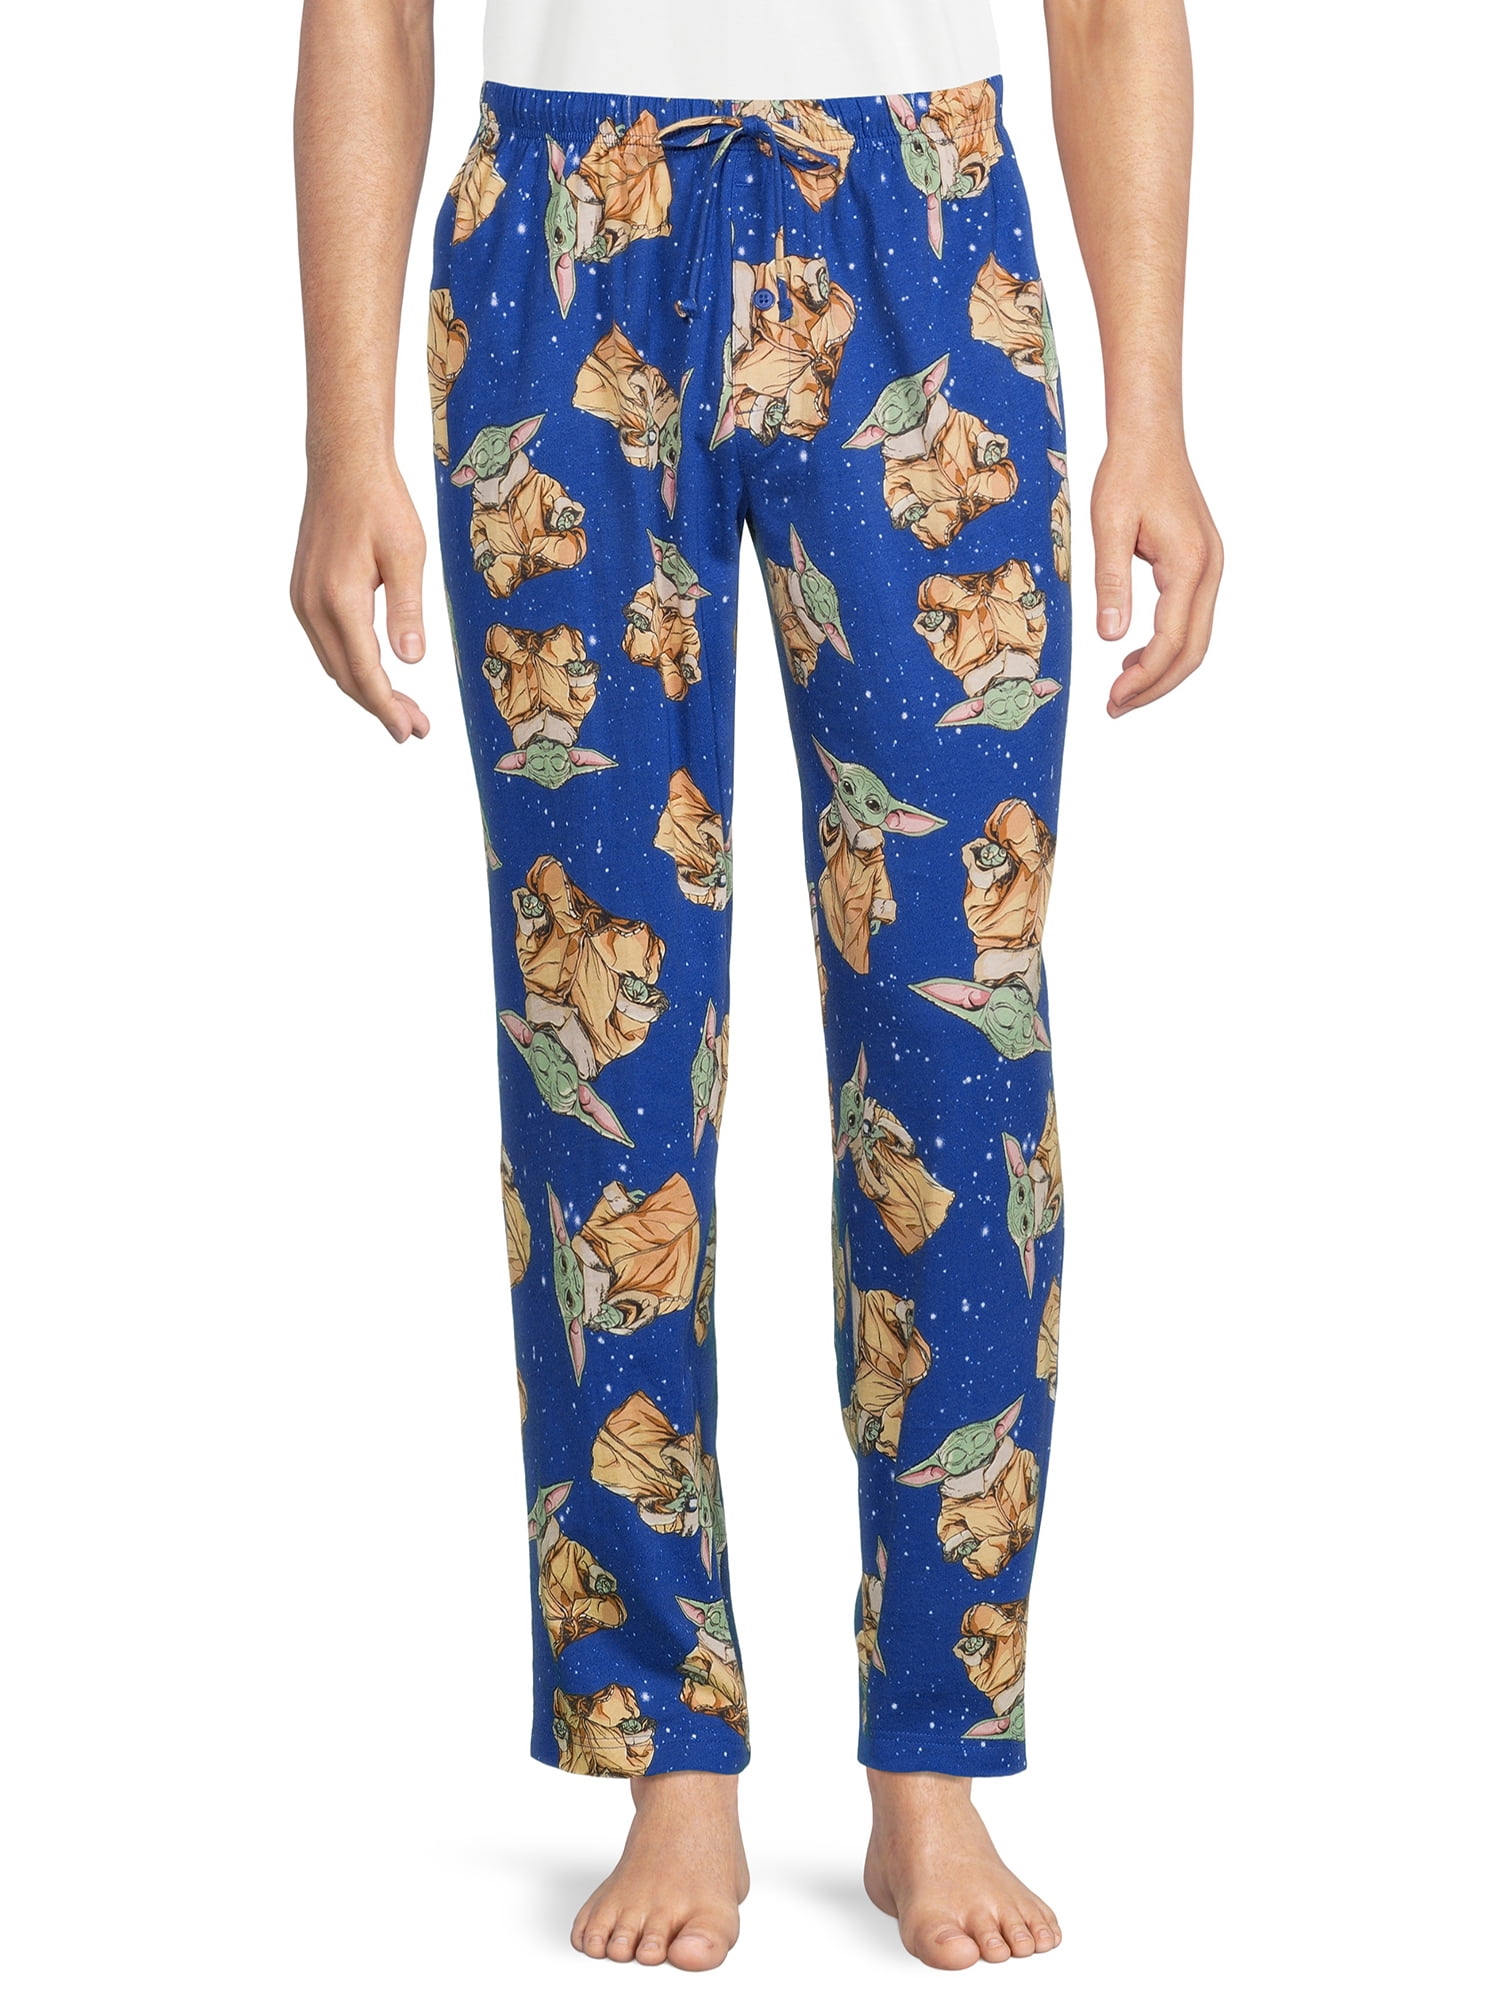 Star Wars Men’s Pajama Pants - Walmart.com